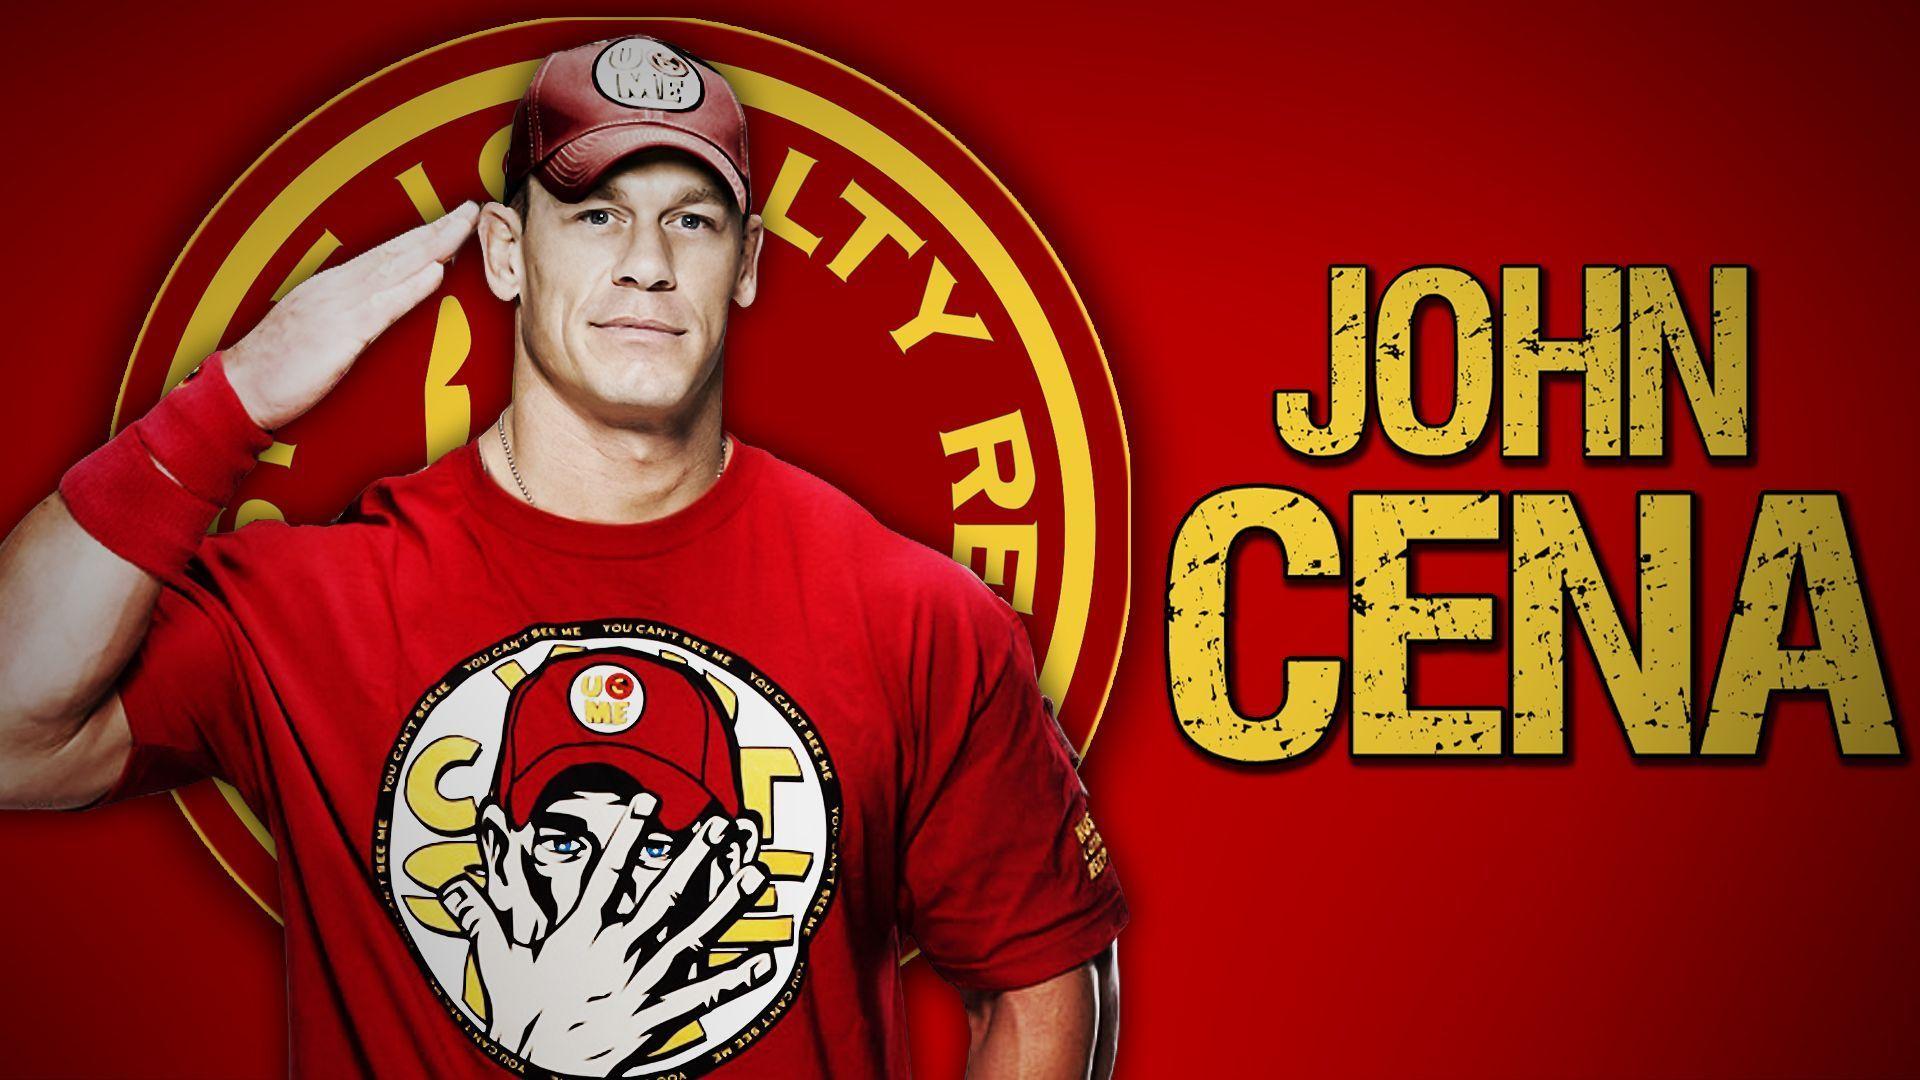 John Cena Wallpaper HD download latest John Cena